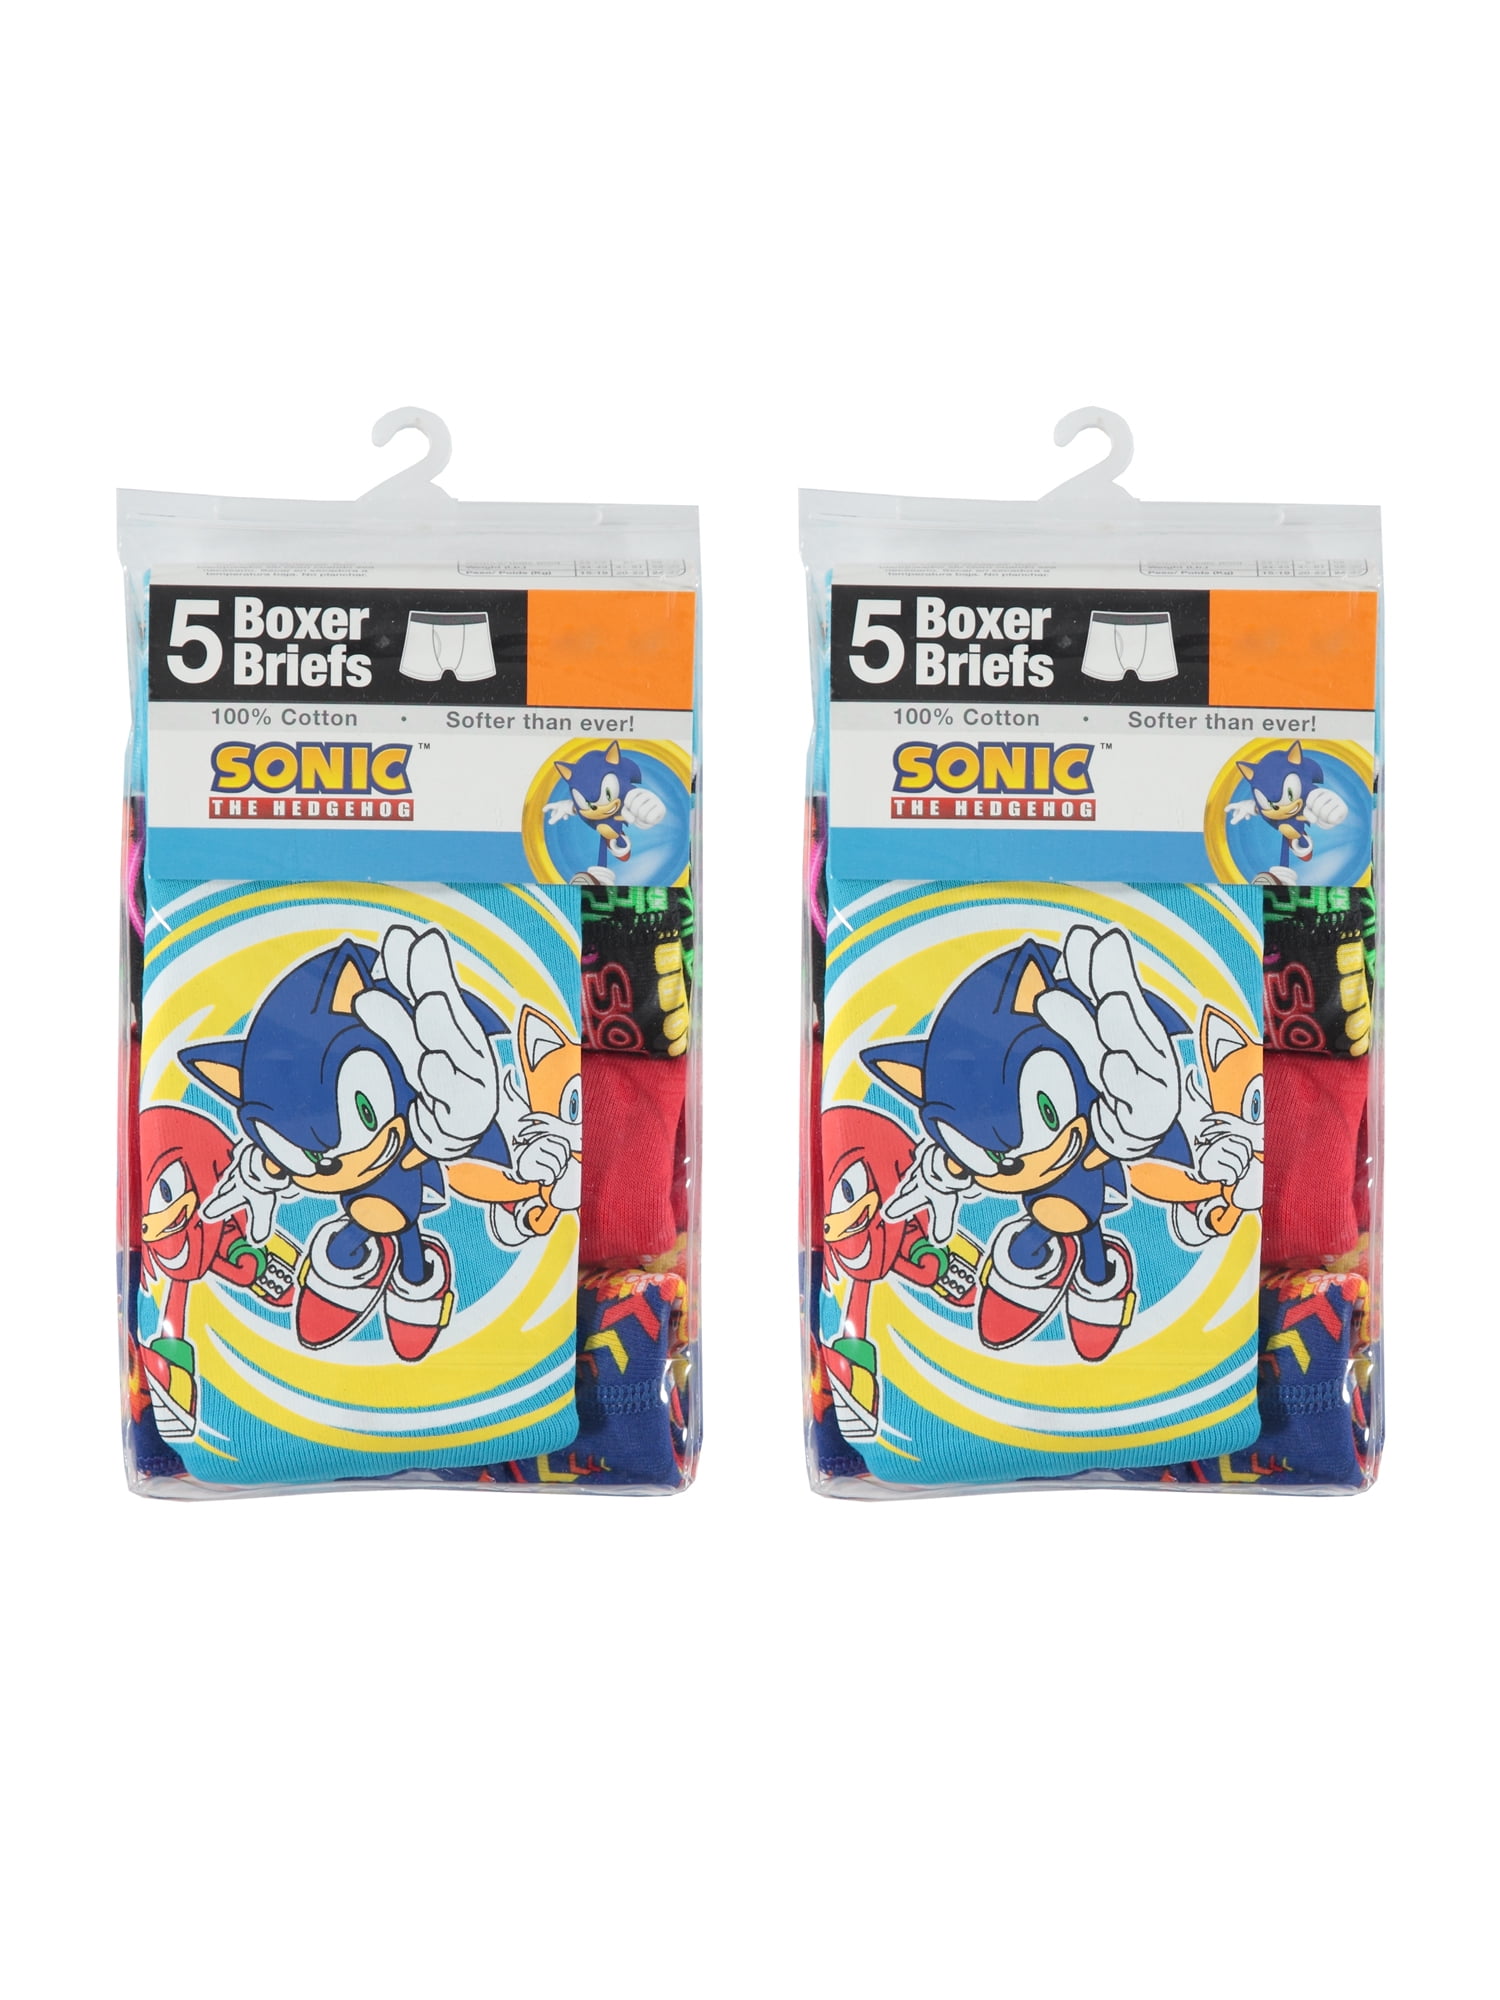 Sonic the Hedgehog Boys Underwear, 10 Pack Boxer Briefs Sizes 4-8 